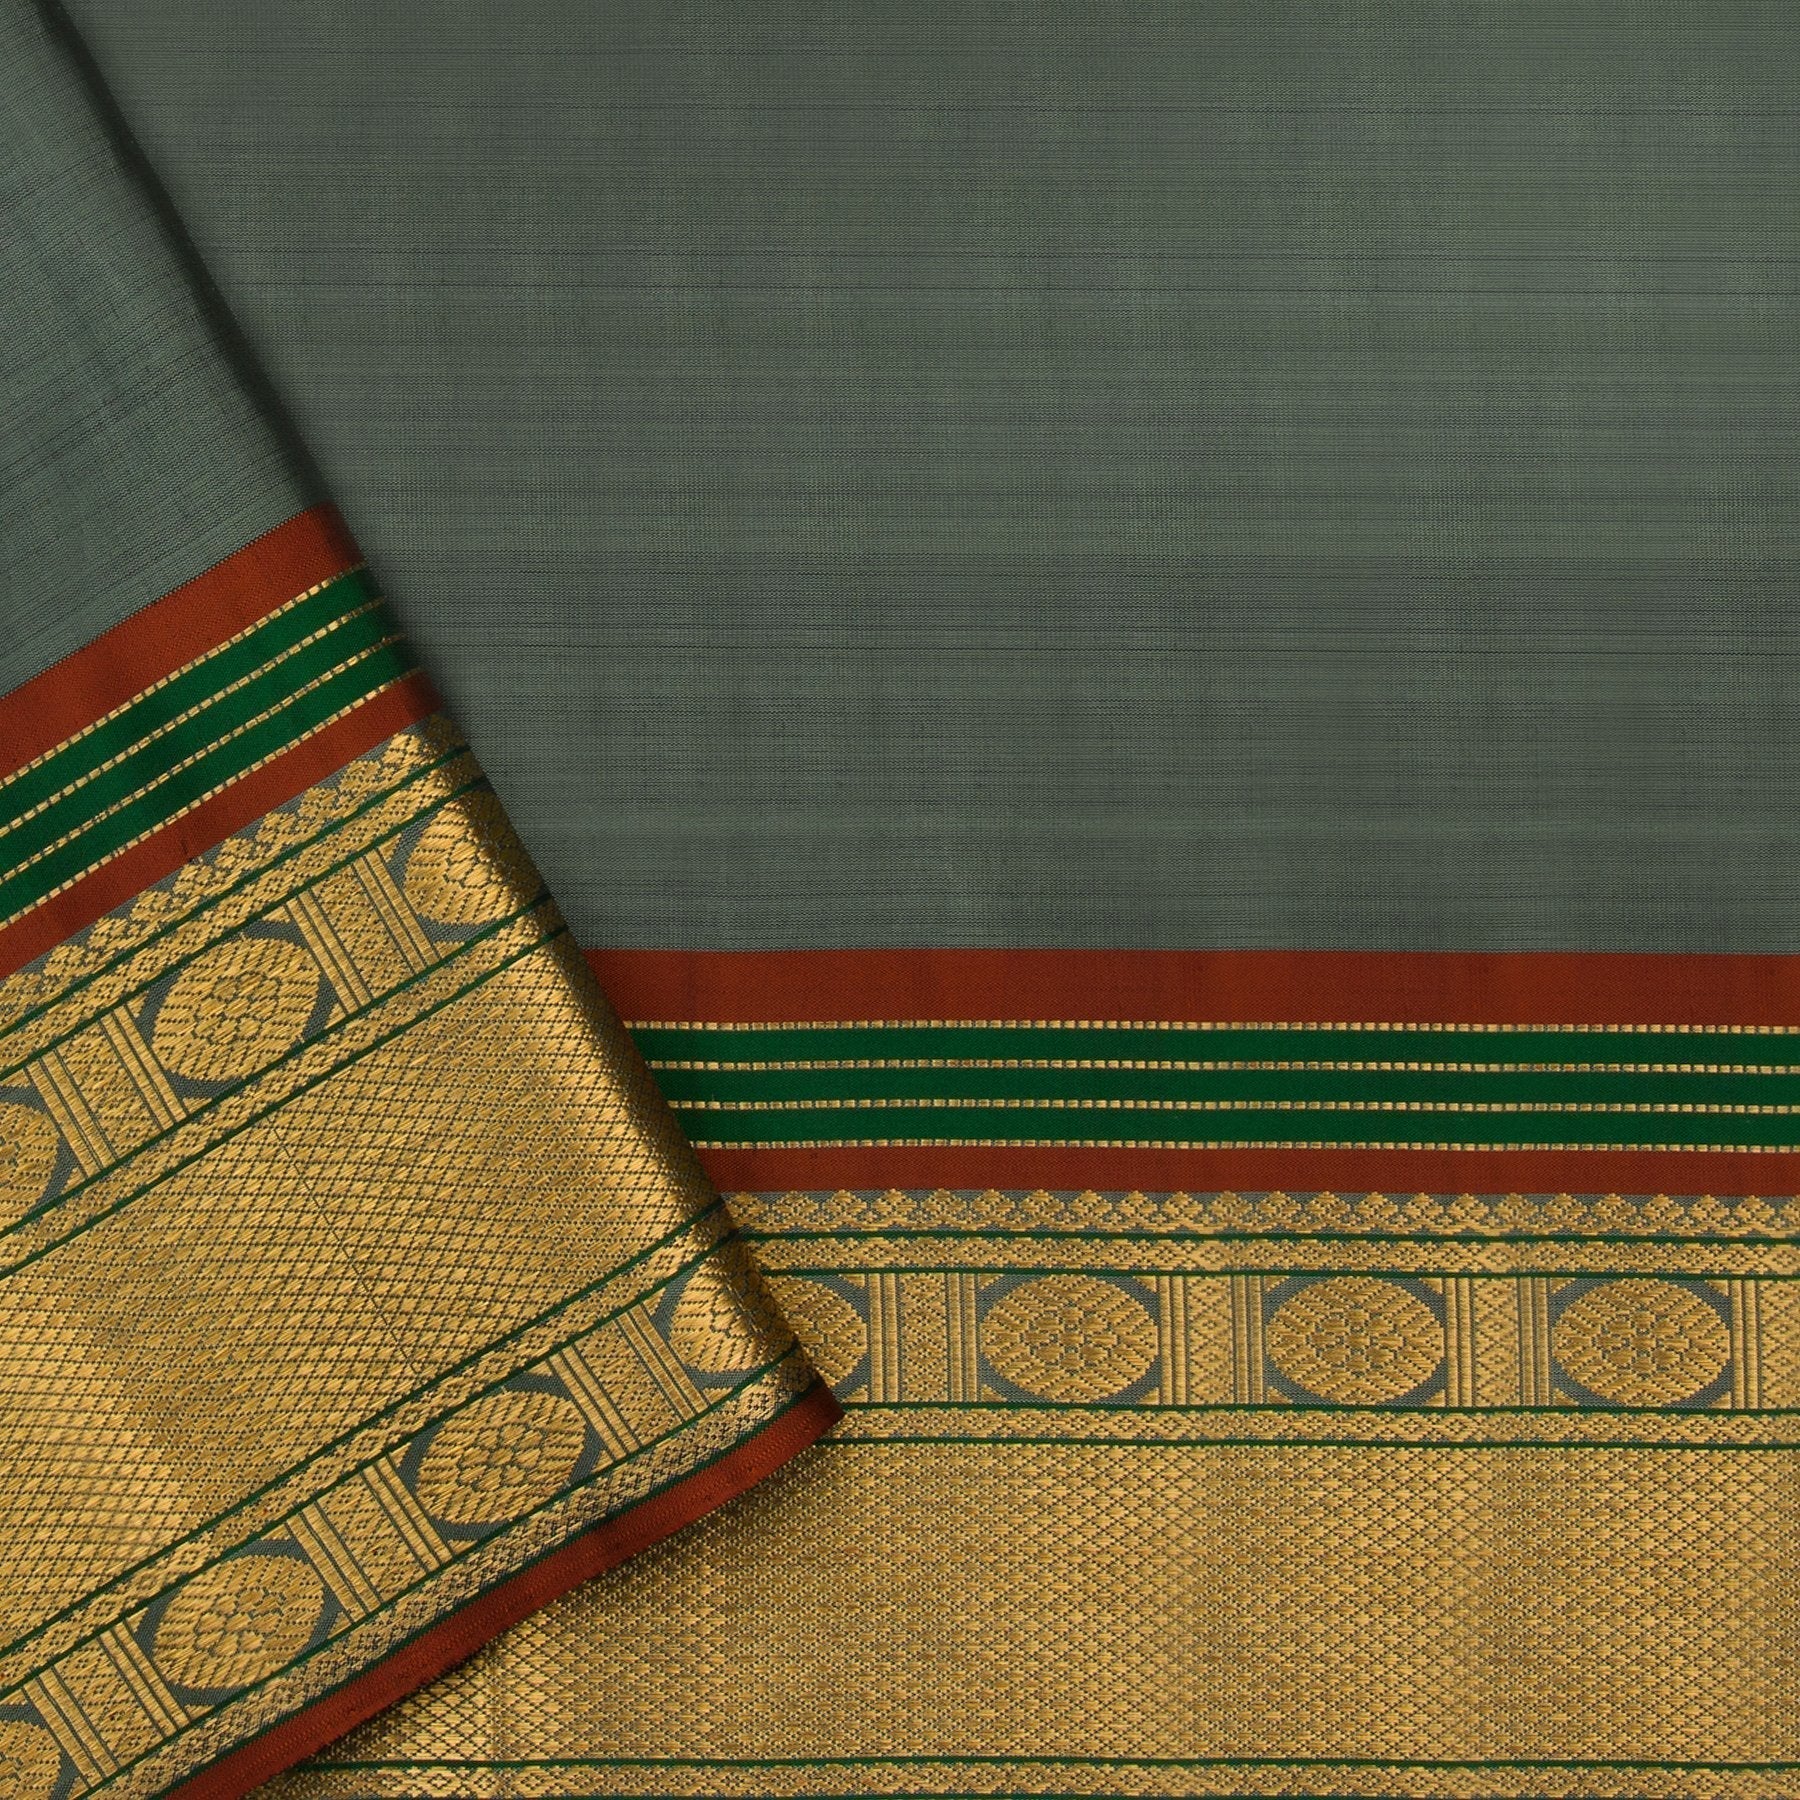 Kanakavalli Kanjivaram Silk Sari 21-040-HS001-01495 - Blouse View